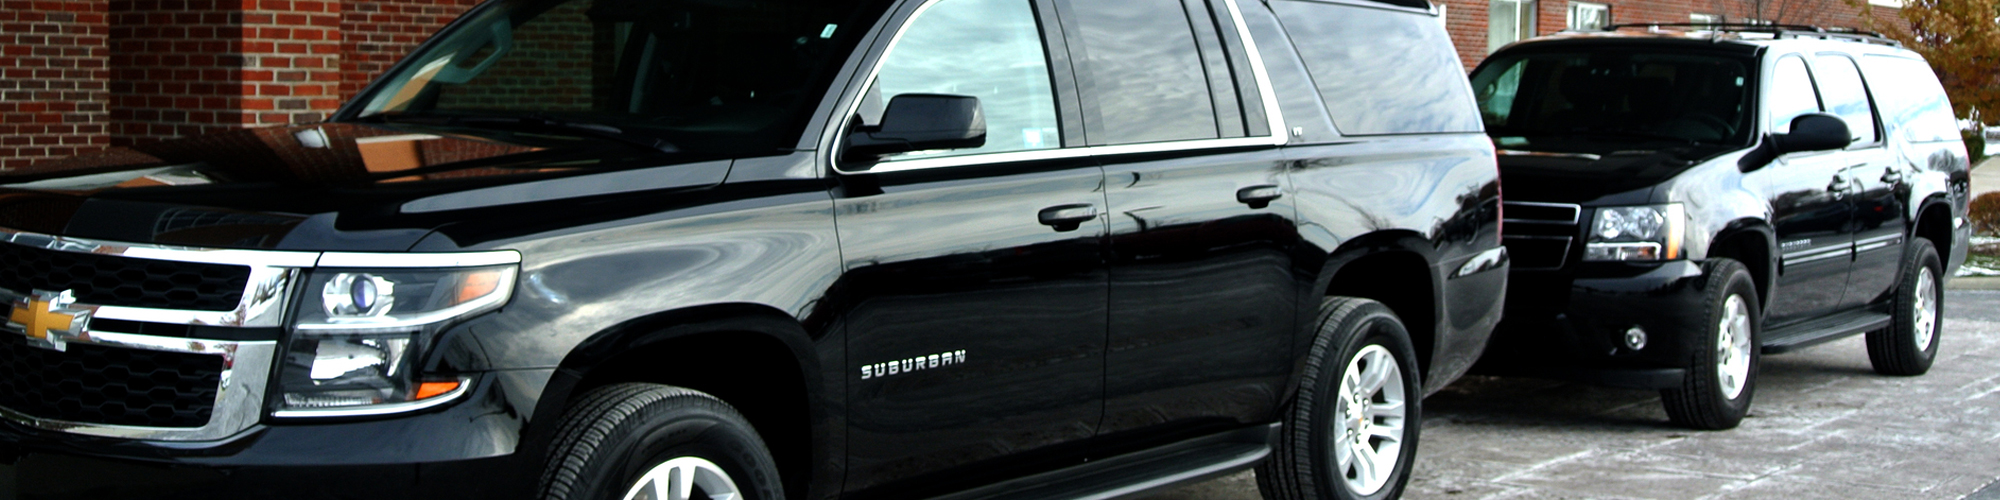 Chevrolet Suburban fleet SUV